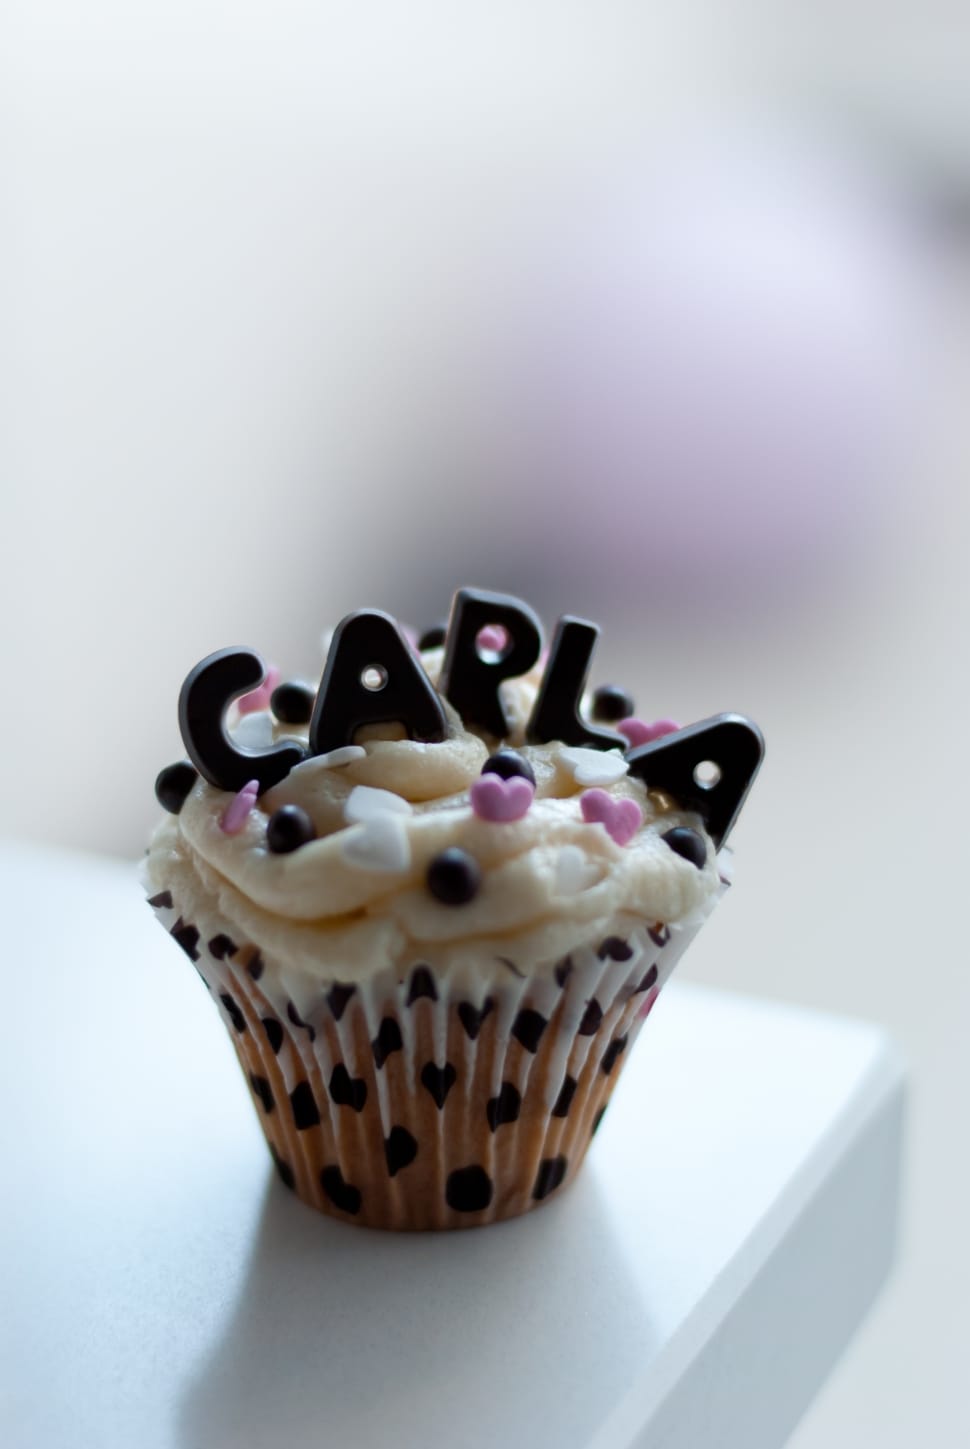 carla cupcake toppings preview